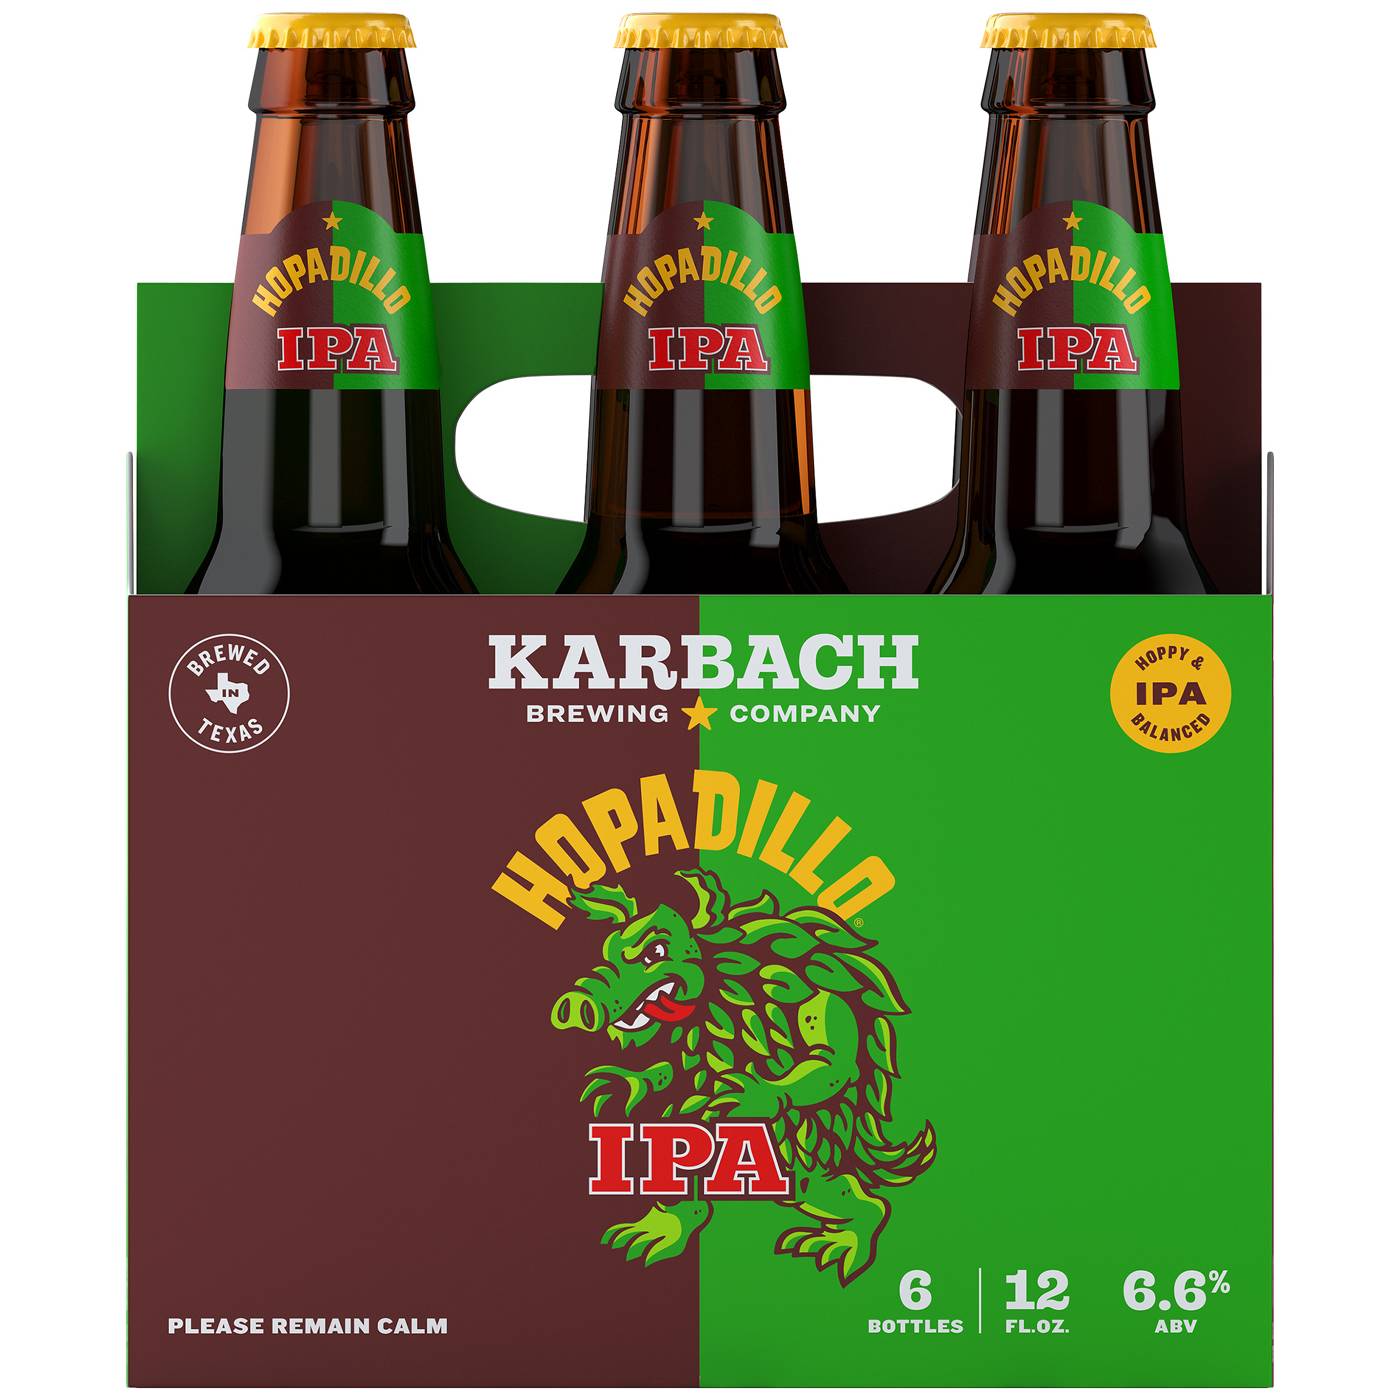 Hopadillo Glass – Karbach Brewing Co.